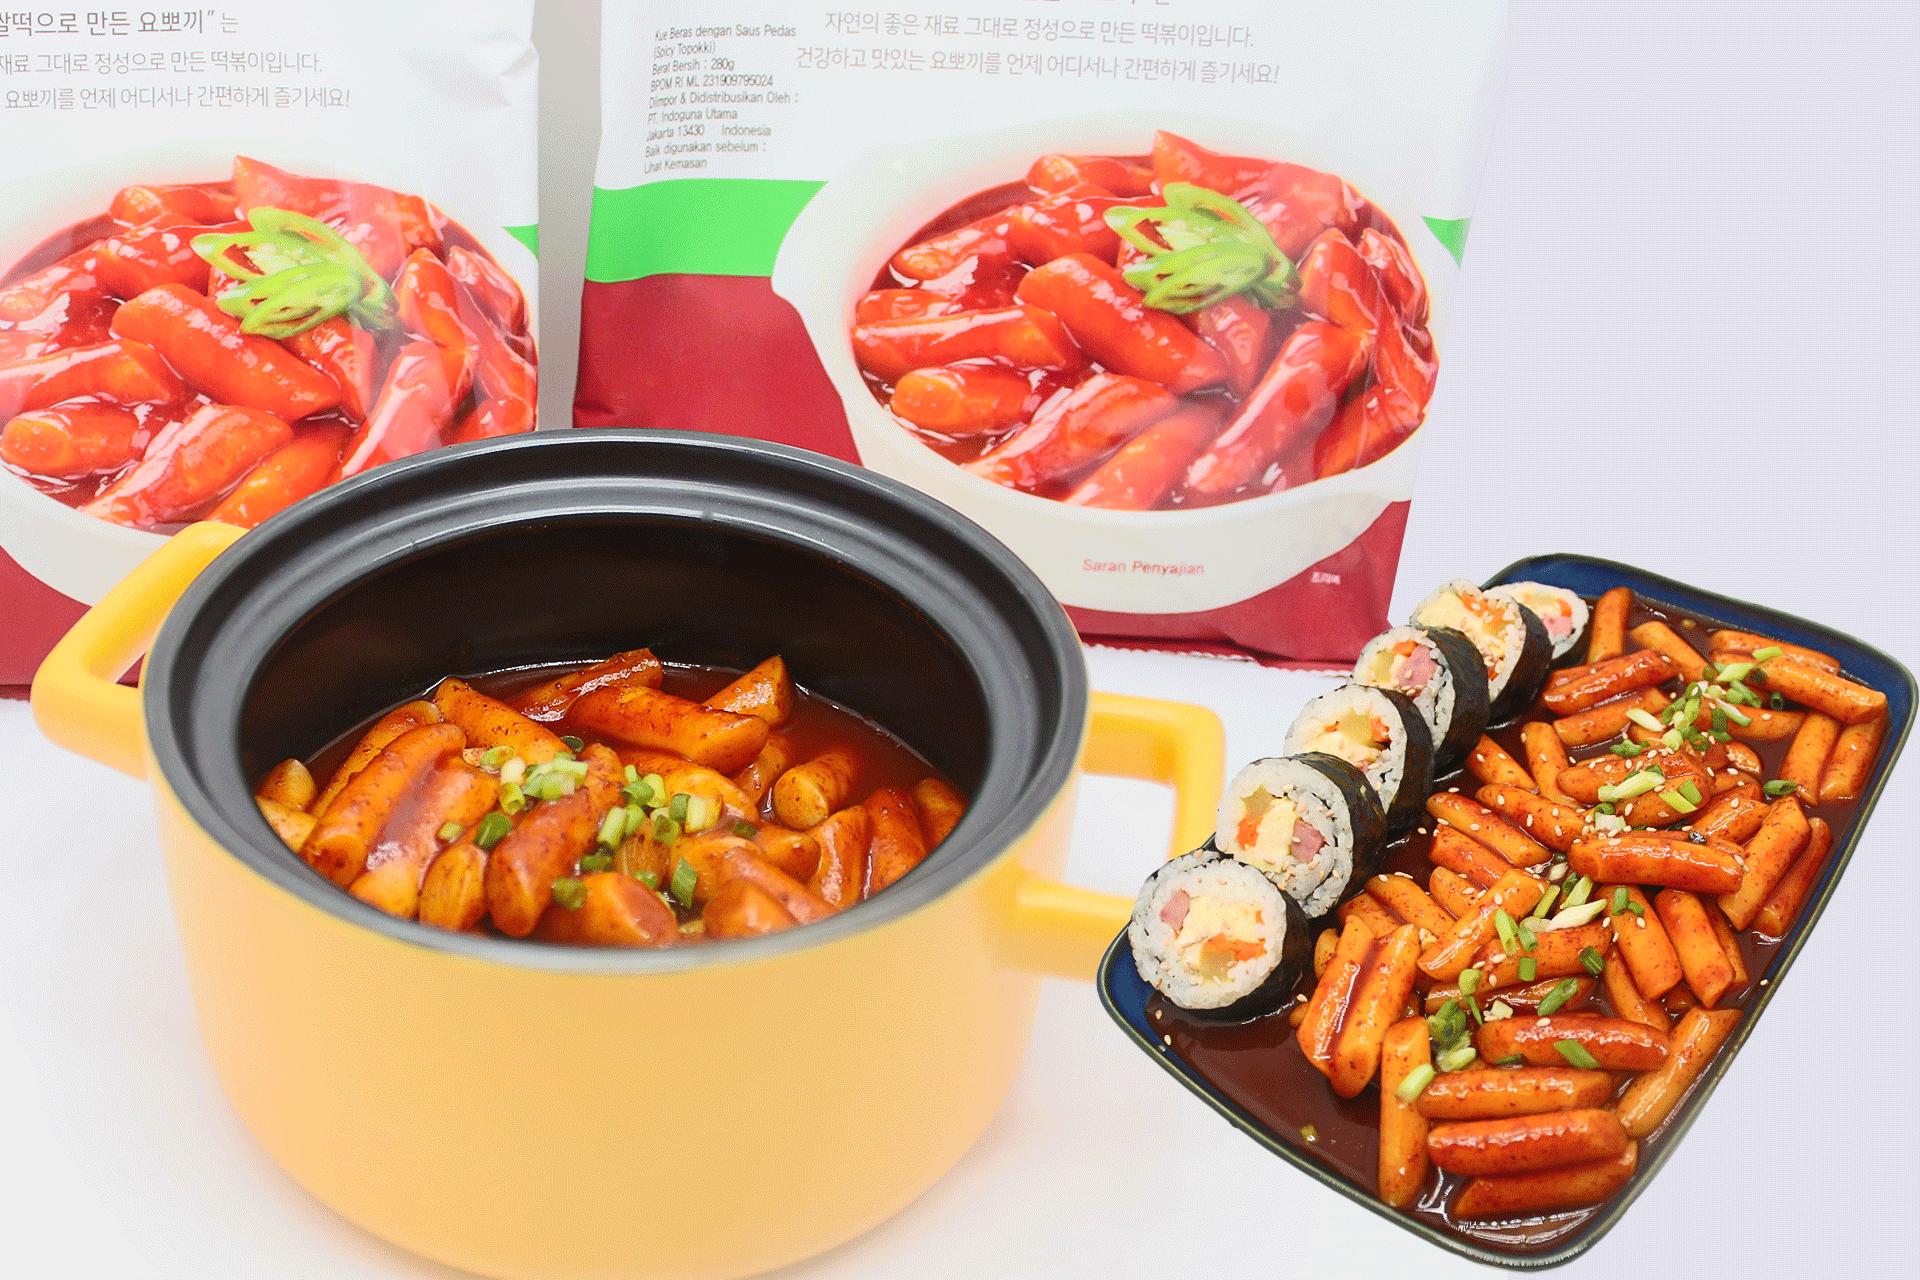 Topokki Combo with Sauce & Kimchi, Vegetarian, 320 gm